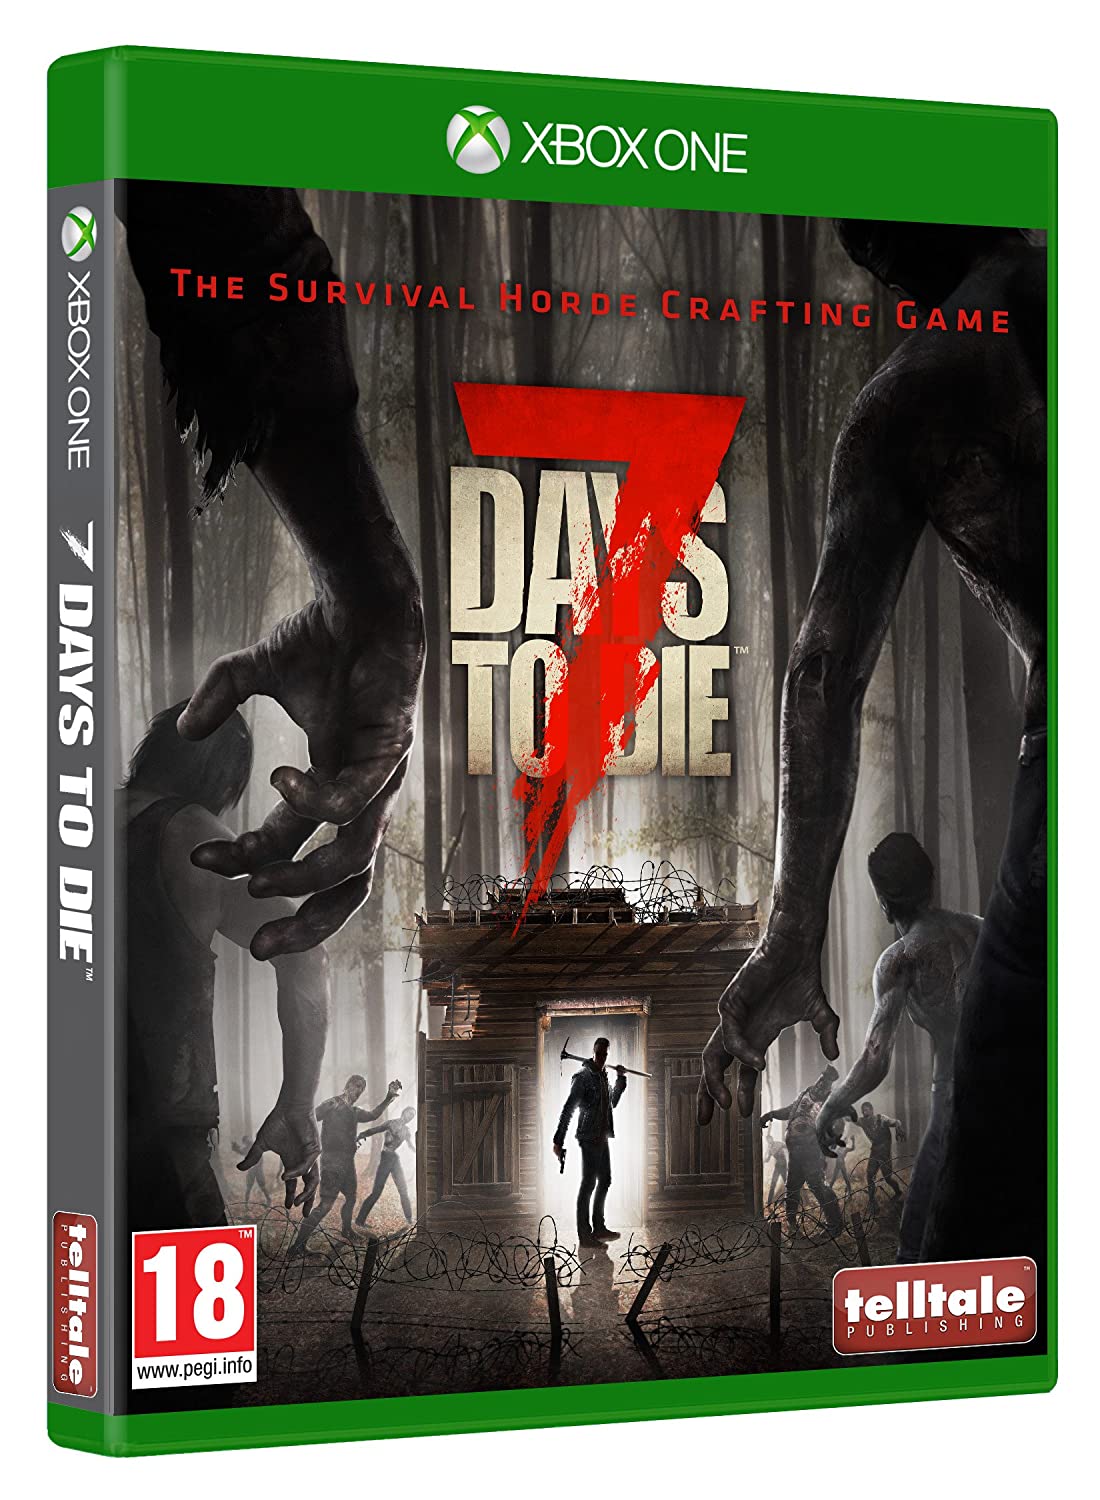 7 Days to Die Digital Download Key (Xbox One) - 